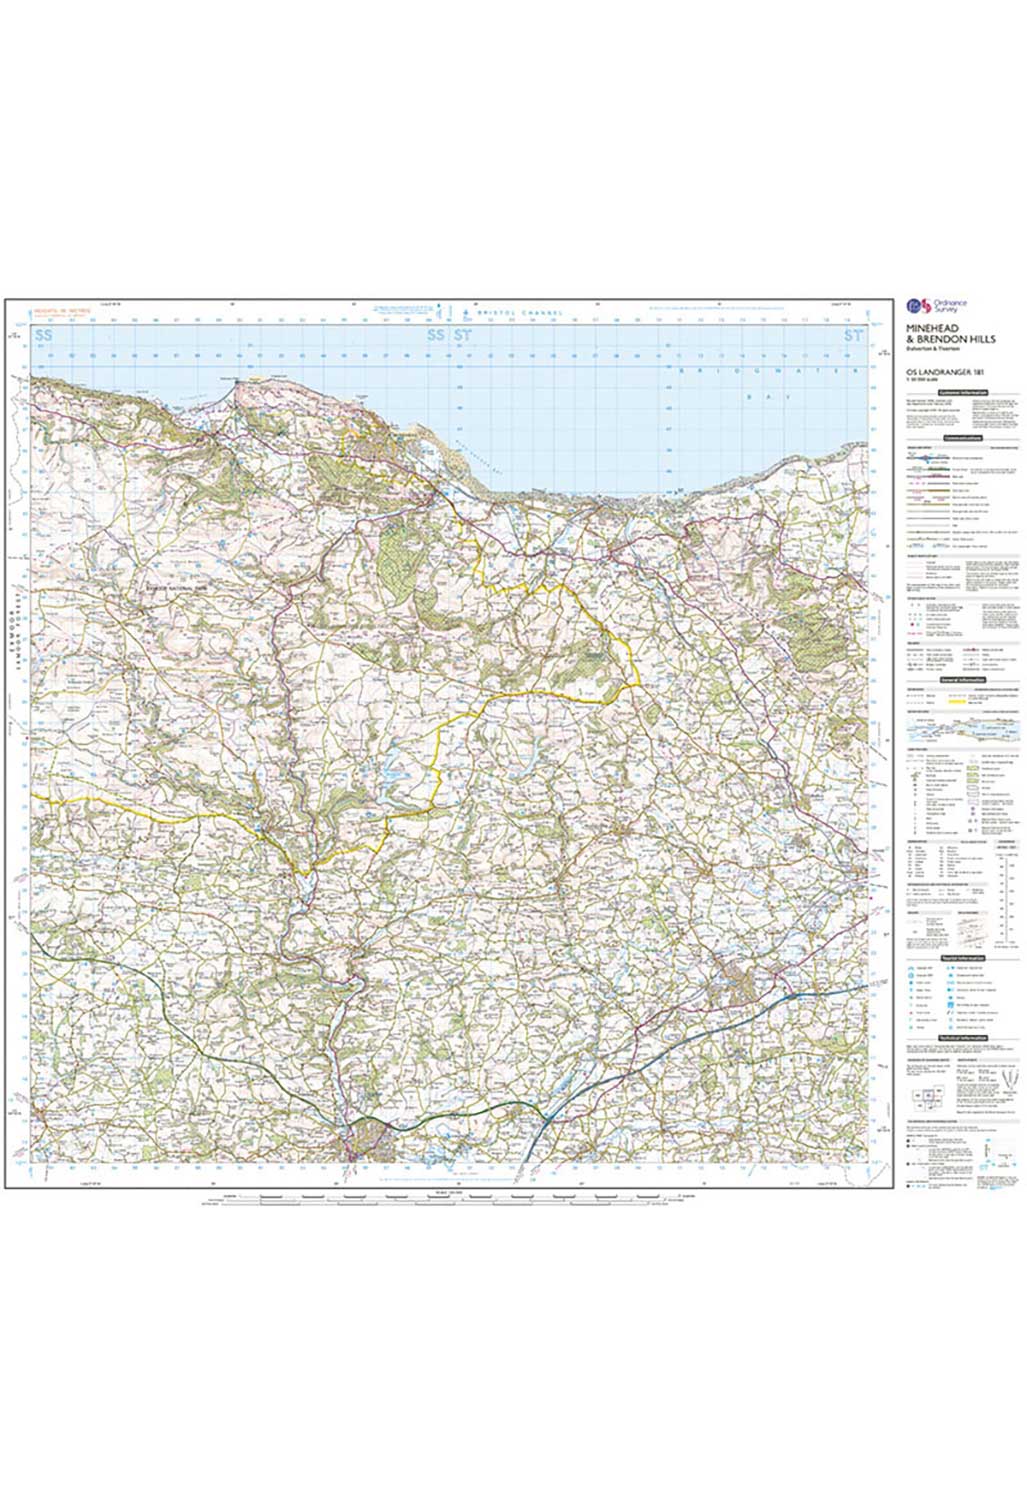 Ordnance Survey Minehead, Brendon Hills, Dulverton & Tiverton - Landranger 181 Map